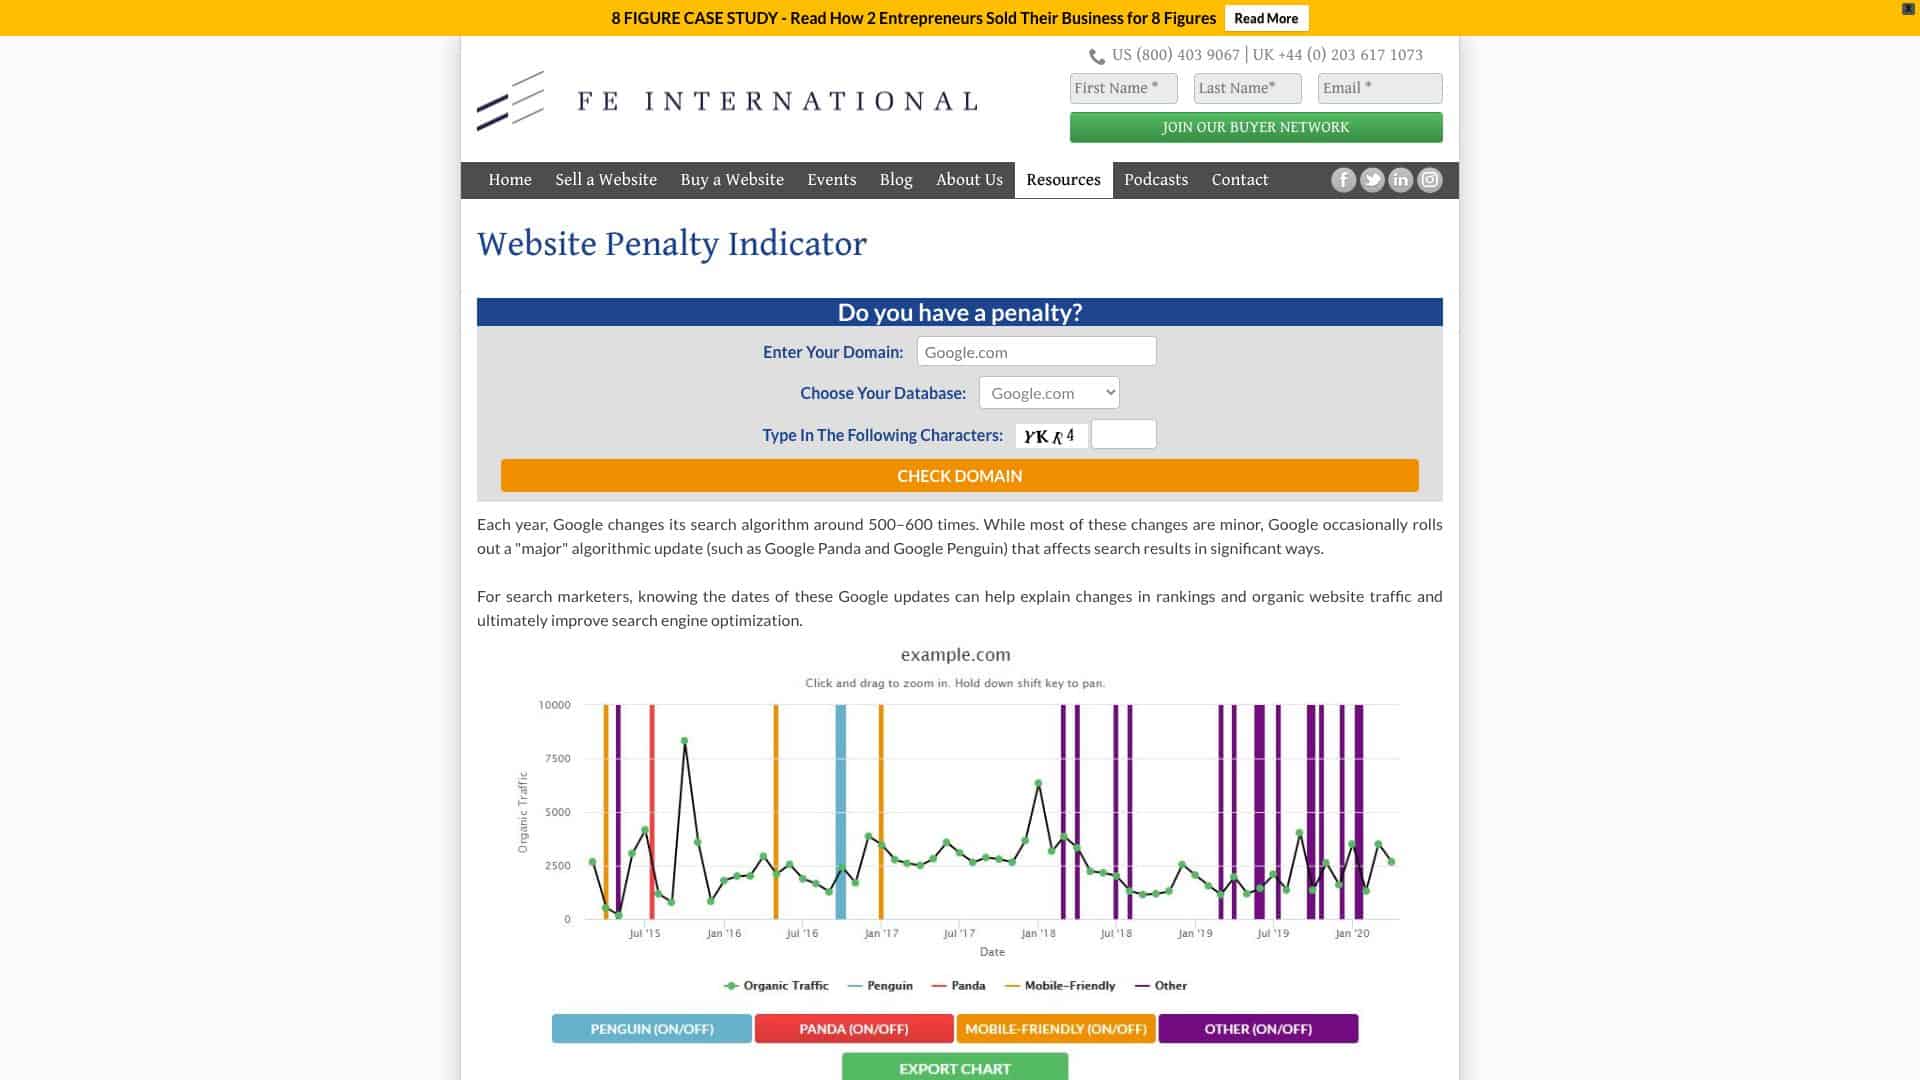 feinternational com website penalty indicator 1643939097061